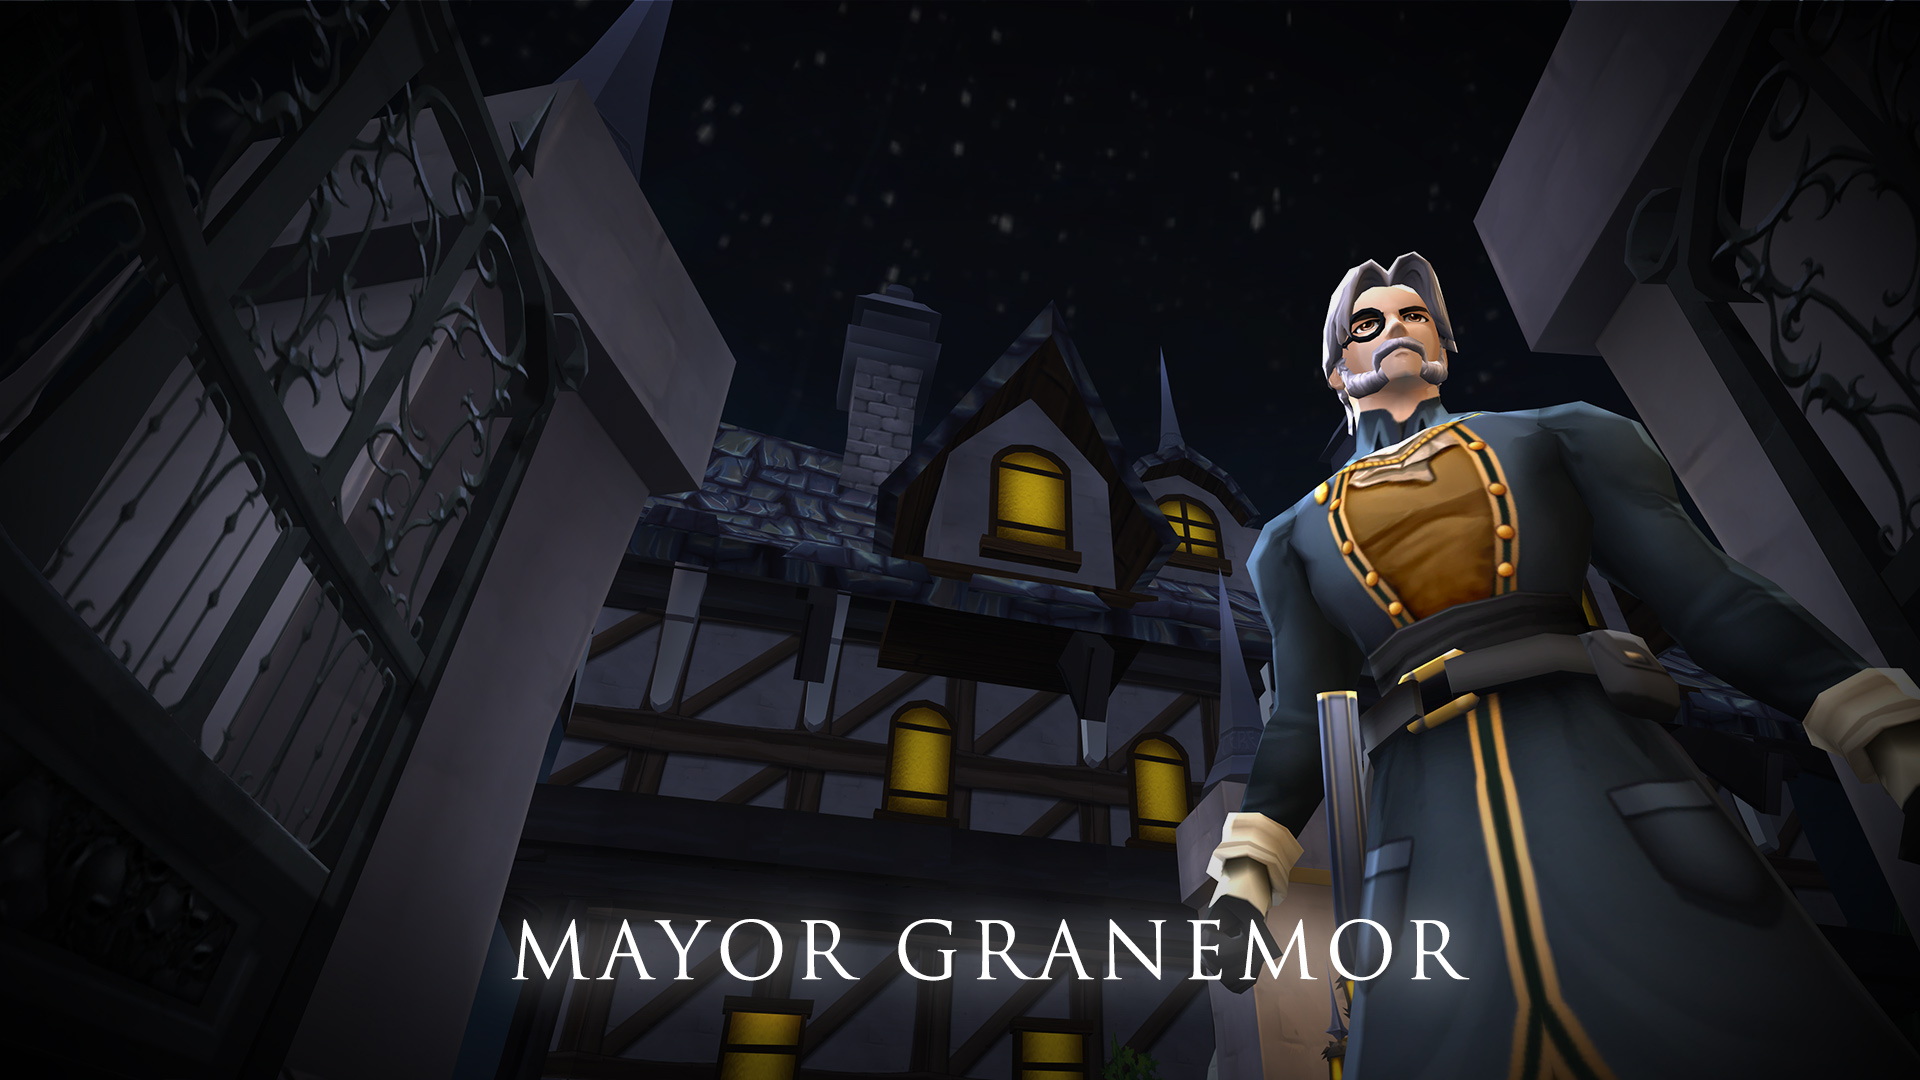 Mayor Granemor of Darkhurst